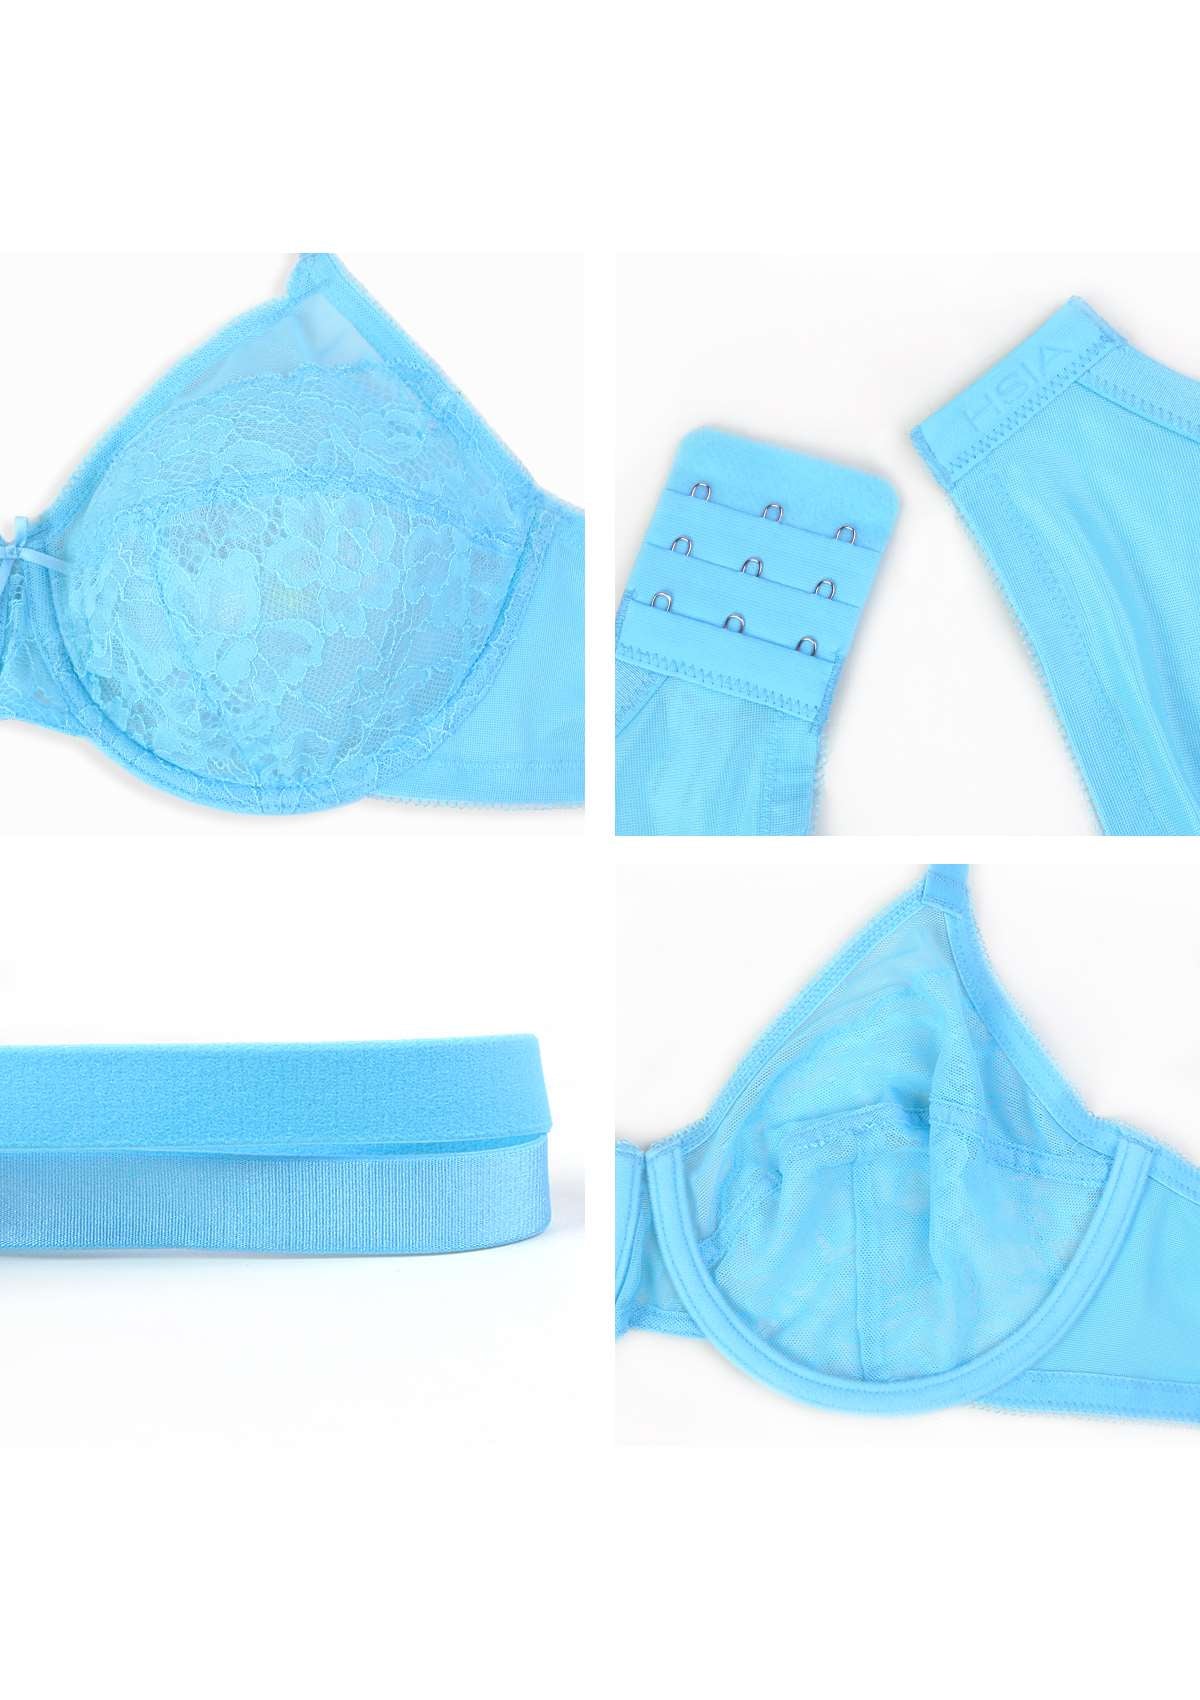 HSIA Enchante Minimizer Lace Bra: Full Support For Heavy Breasts - Capri Blue / 36 / G